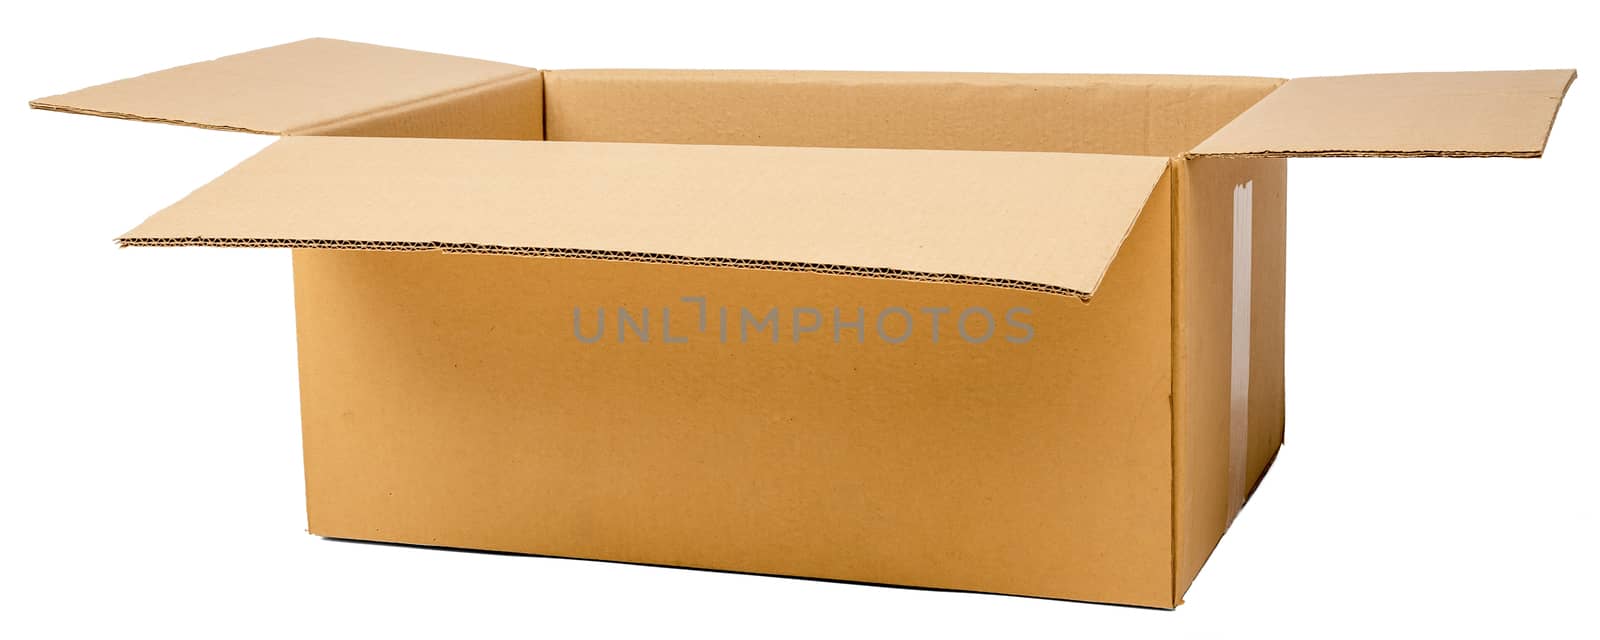 Open brown cardboard box by cherezoff